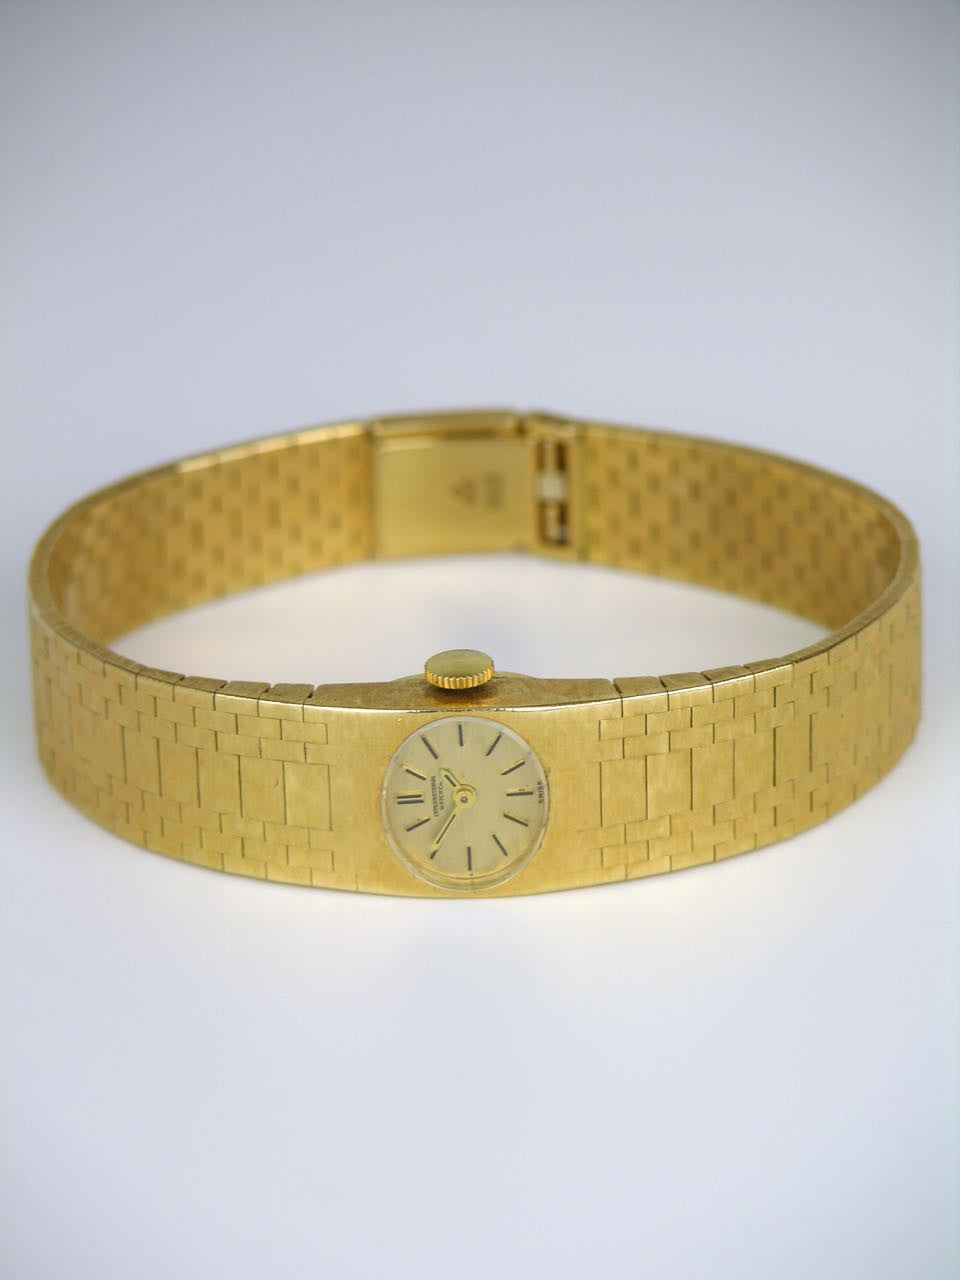 International Watch Company yellow gold dress Wristwatch